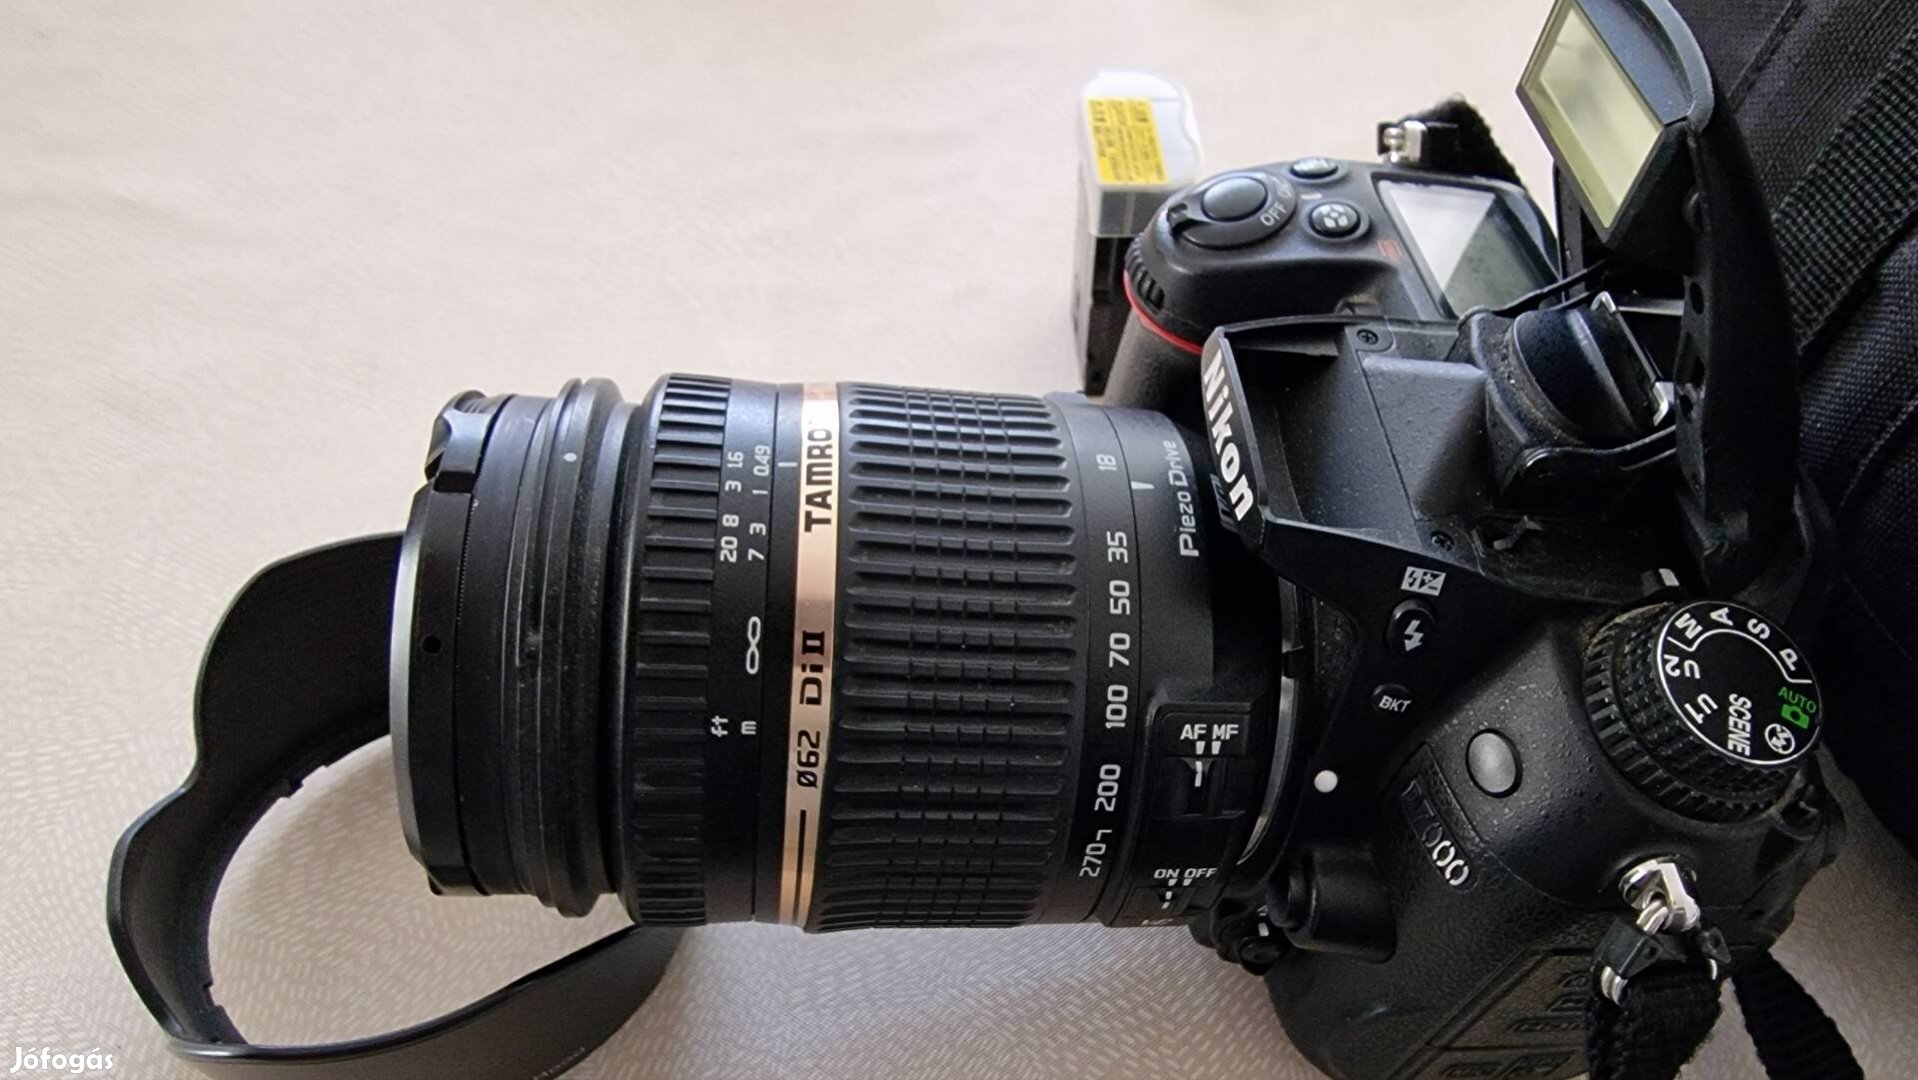 Nikon D7000, Tamron 18-270mm, Sigma 150-500 mm 